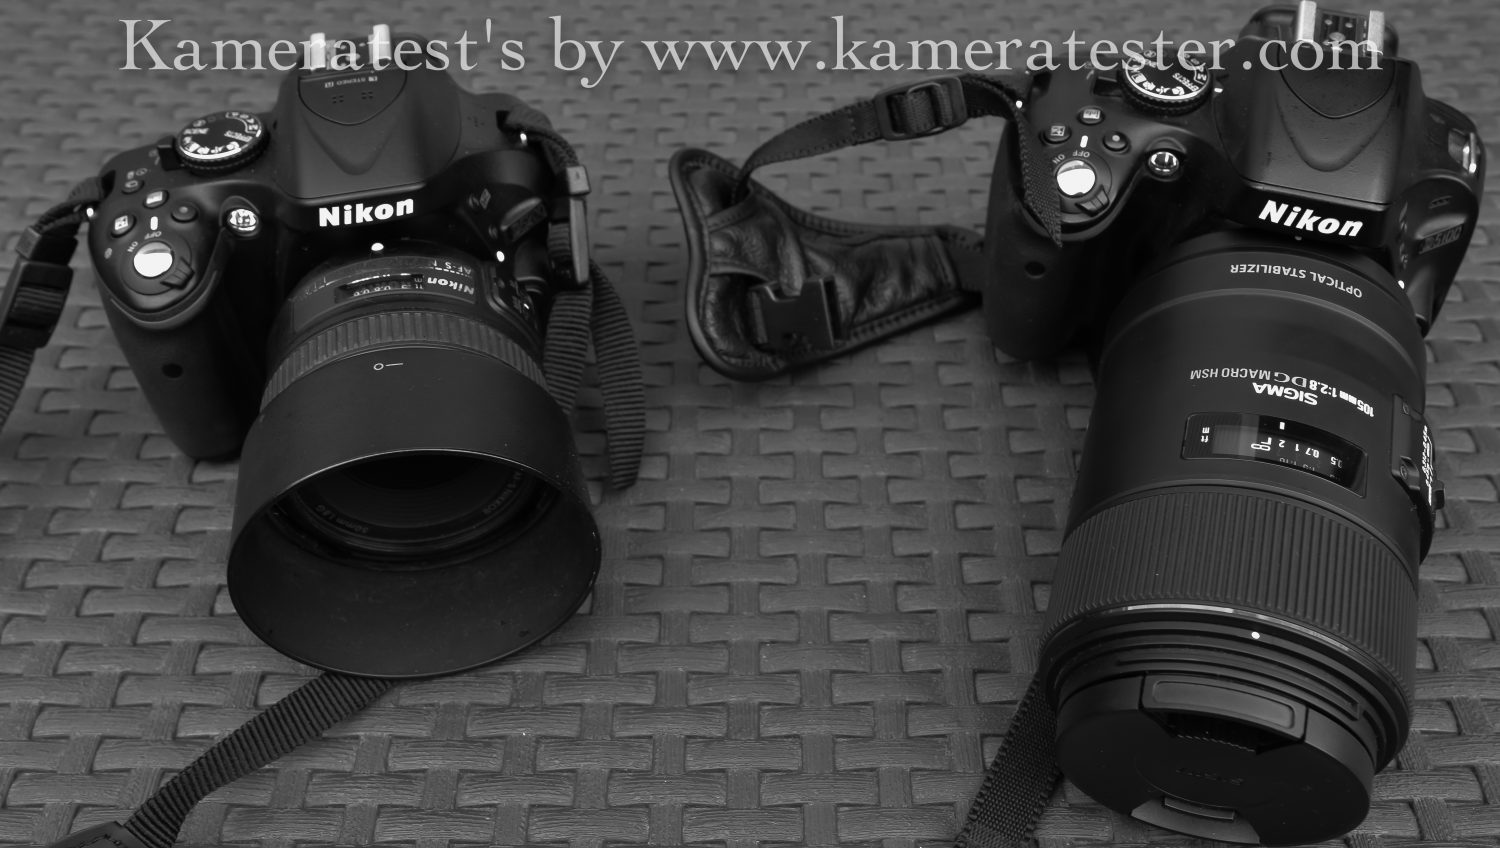 Kamera Tests | Kamera Tester
